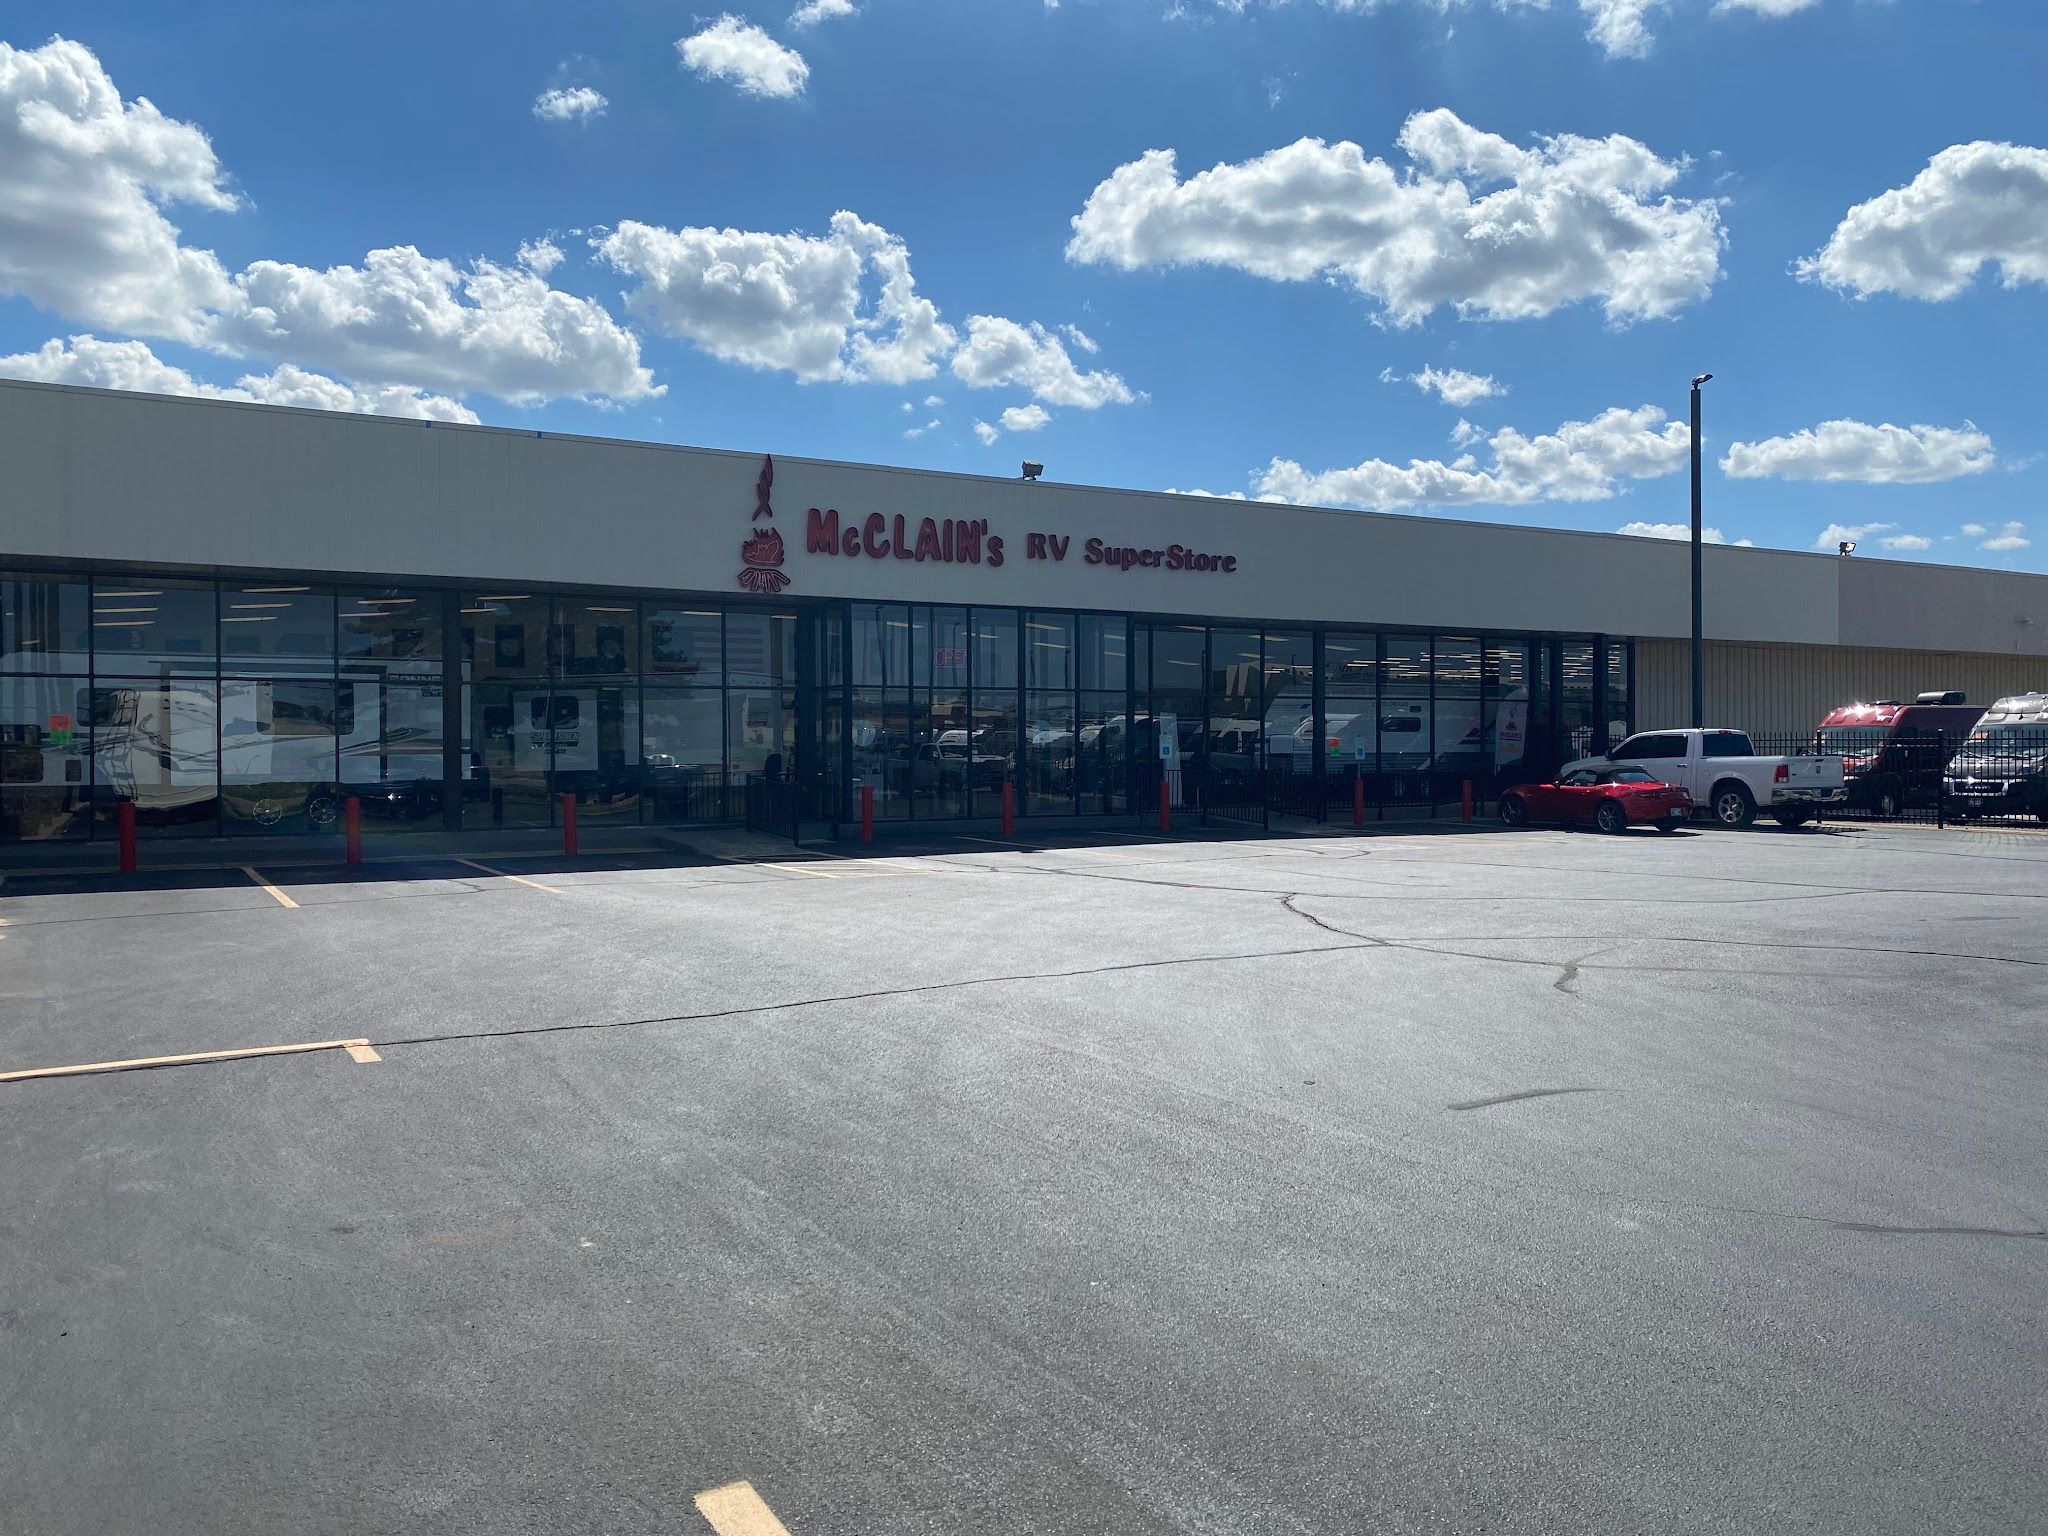 McClain's RV SuperStores Oklahoma City